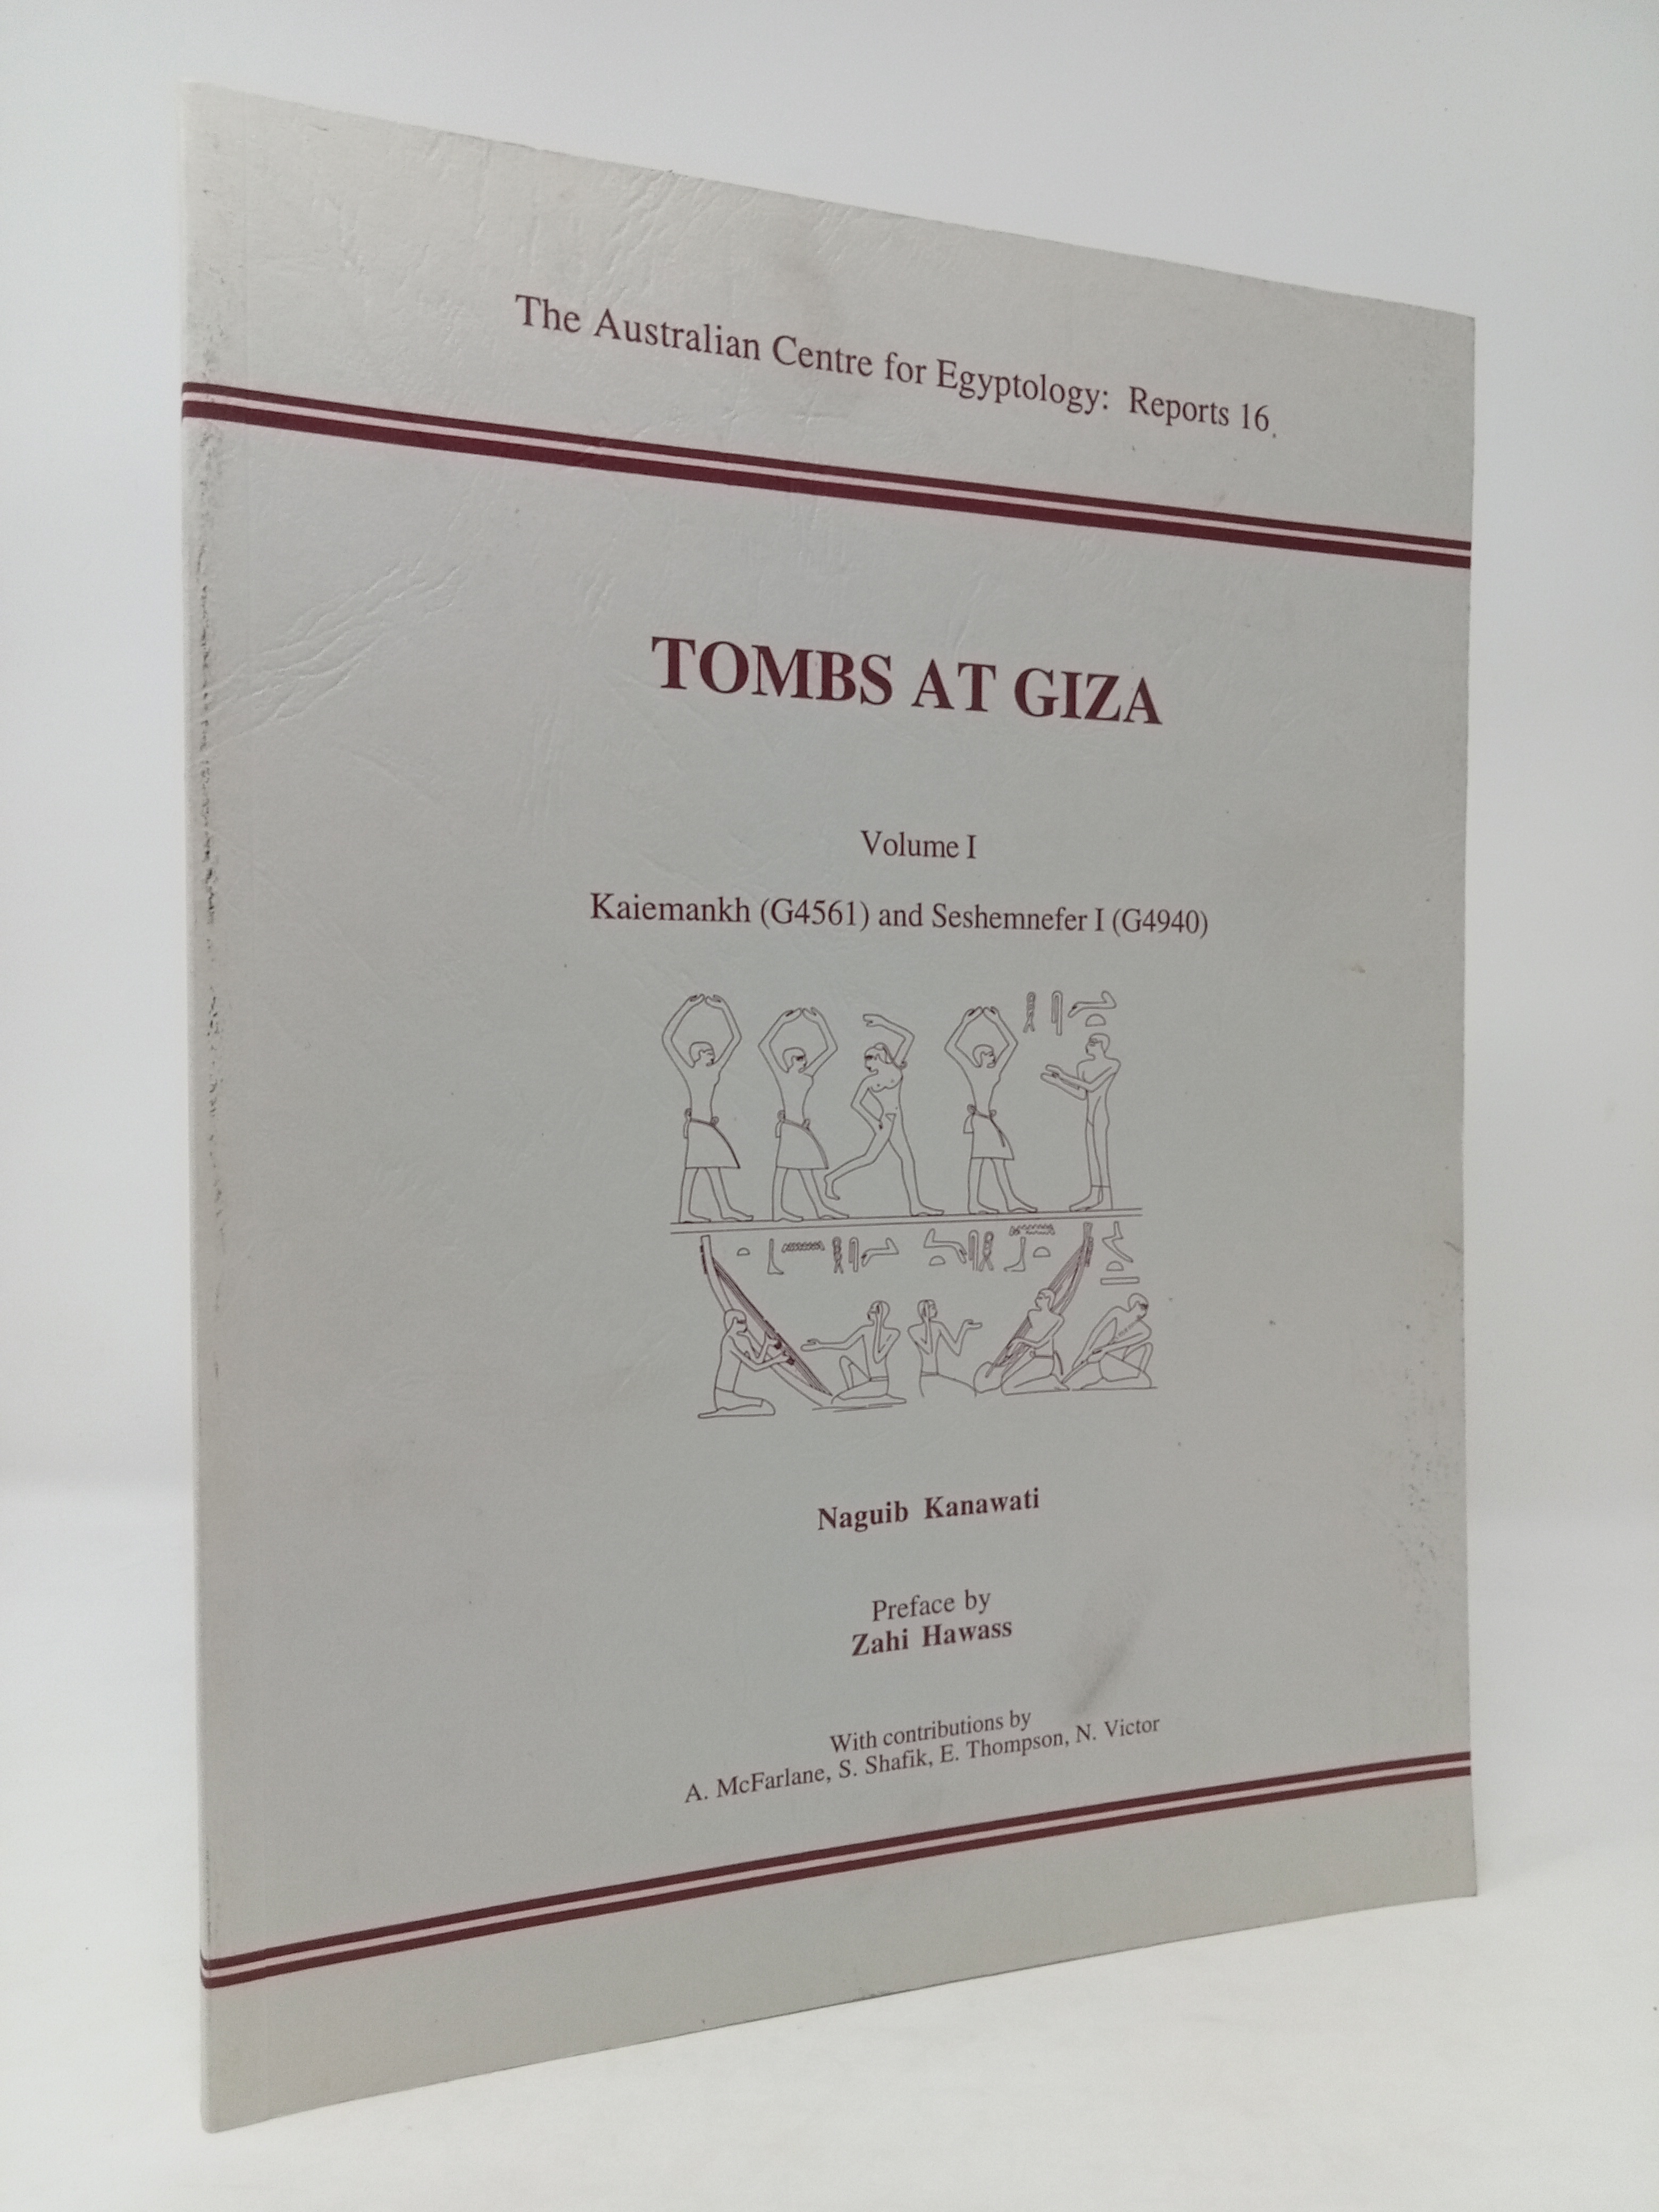 Tombs at Giza. Volume 1: Kaiemankh and Seshemnefer. - Naguib Kanawati.